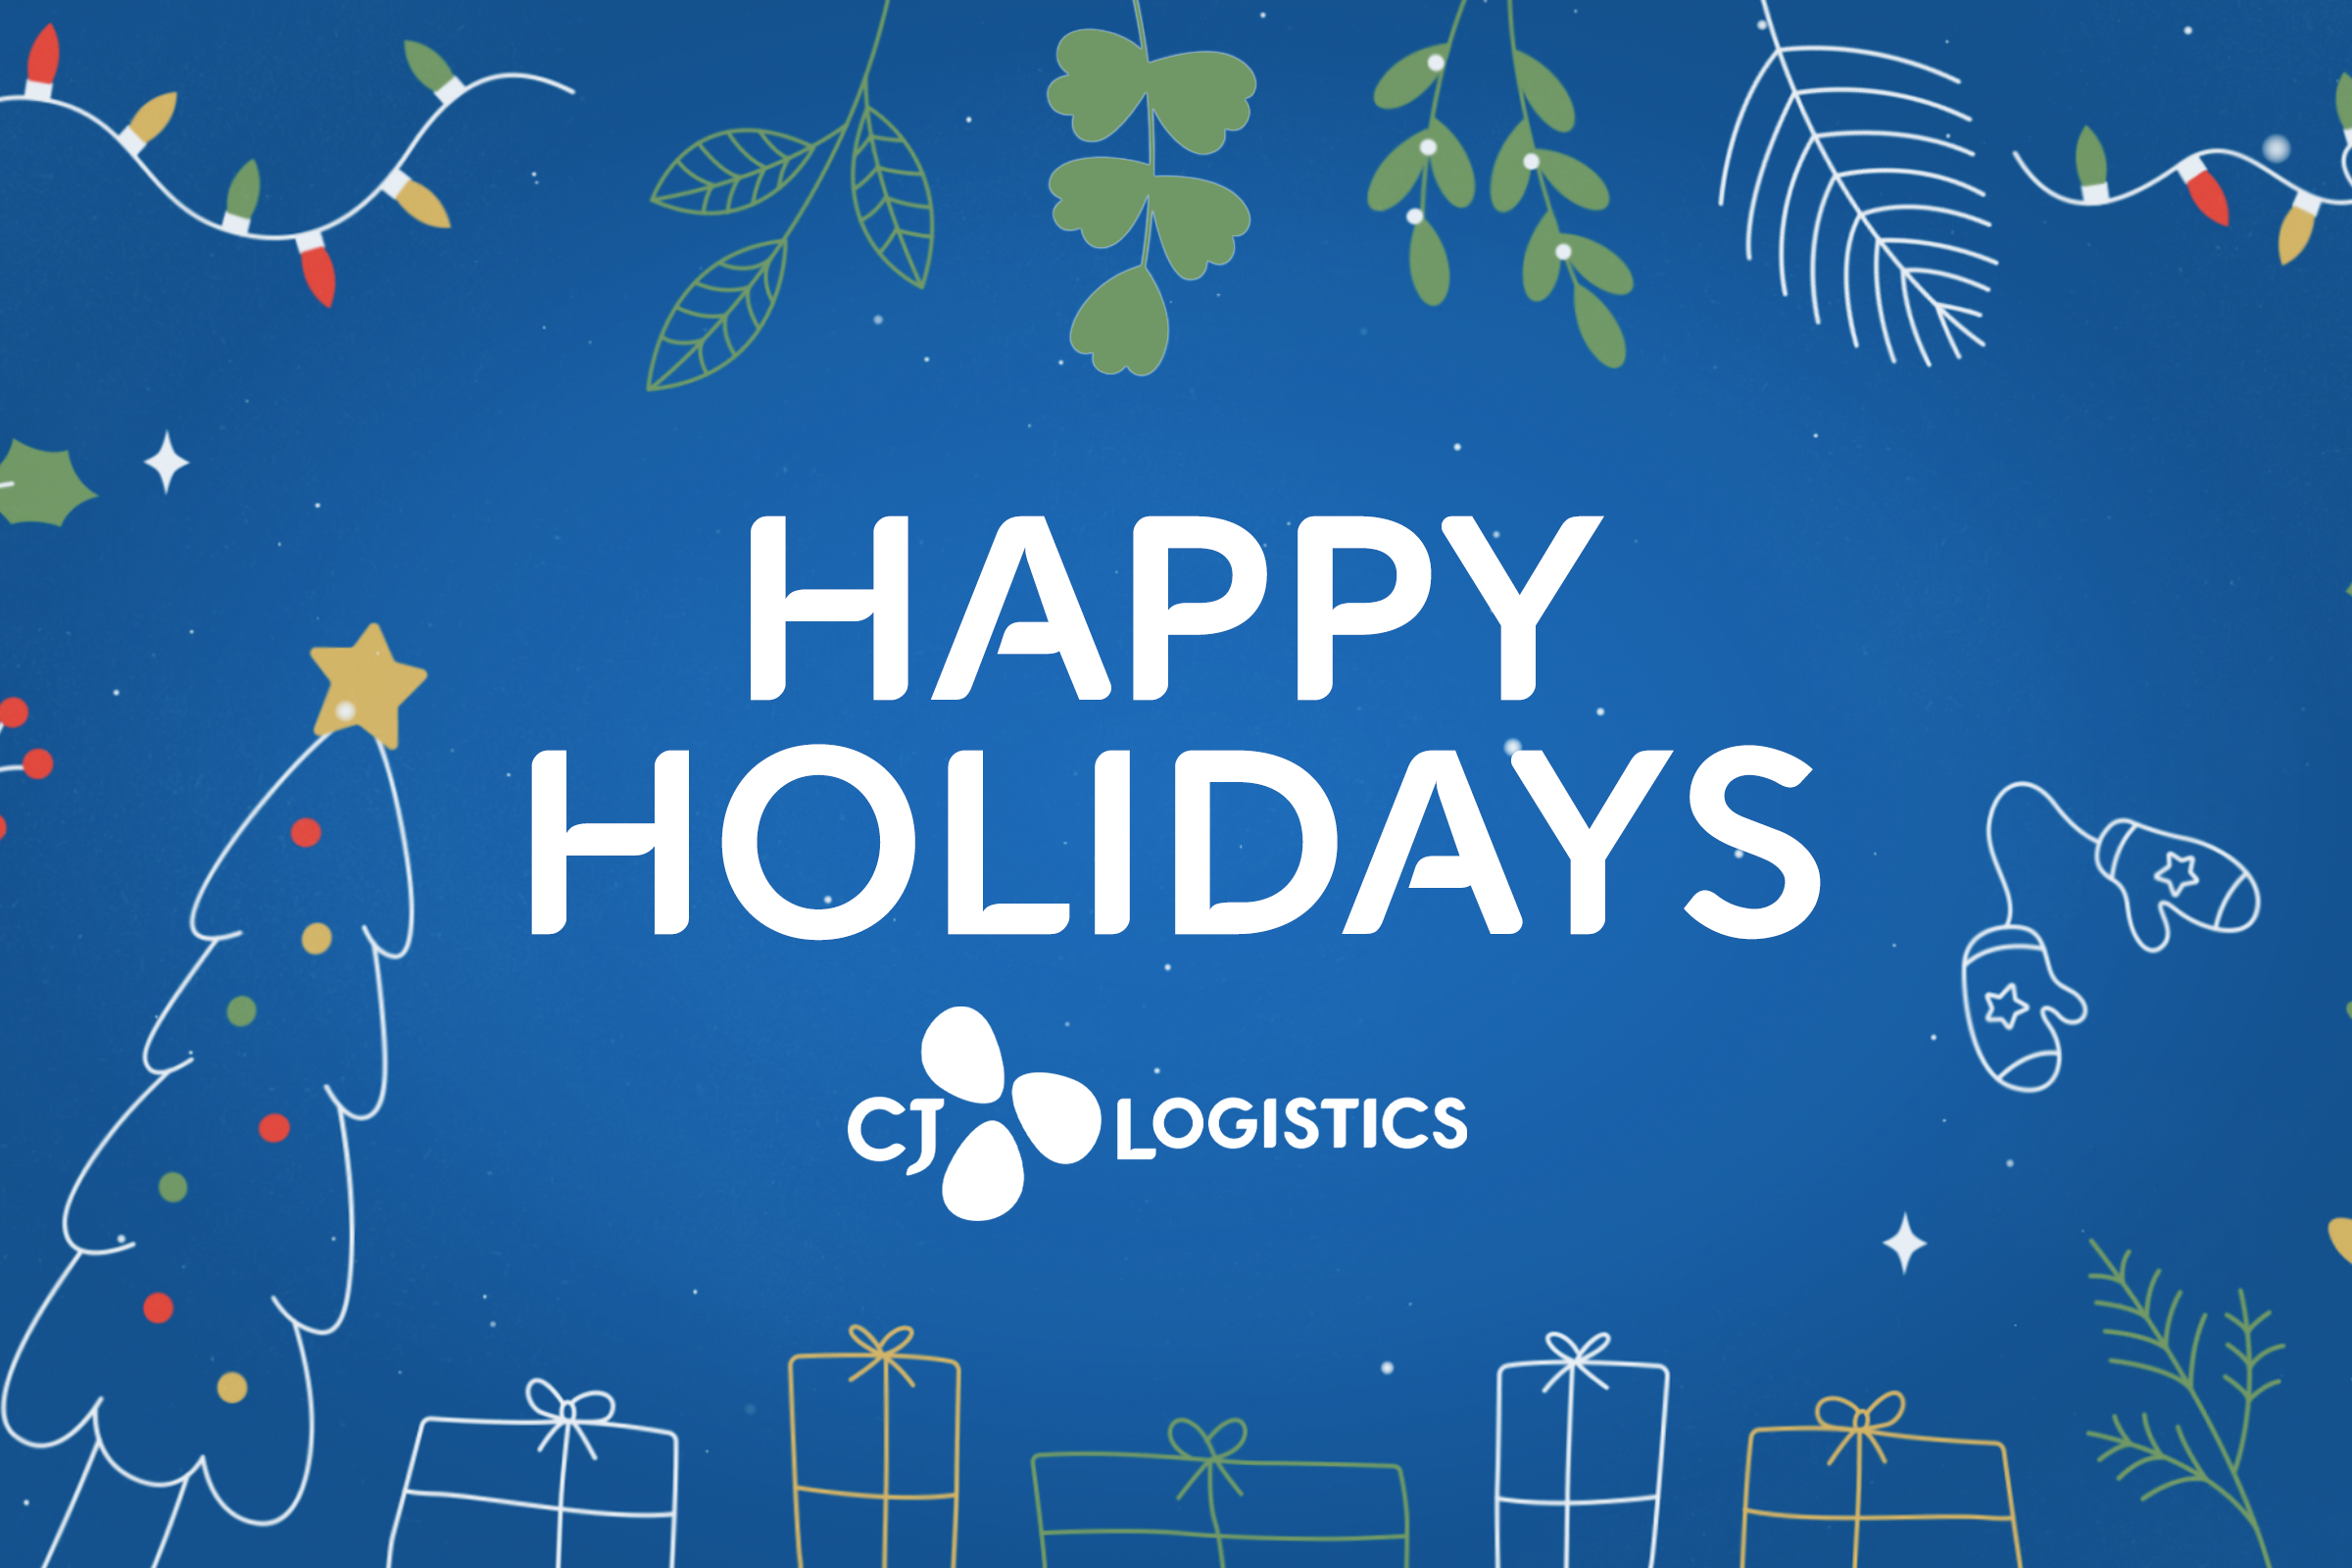 cj logistics america, 3pl, happy holidays, supply chain, logistics holiday